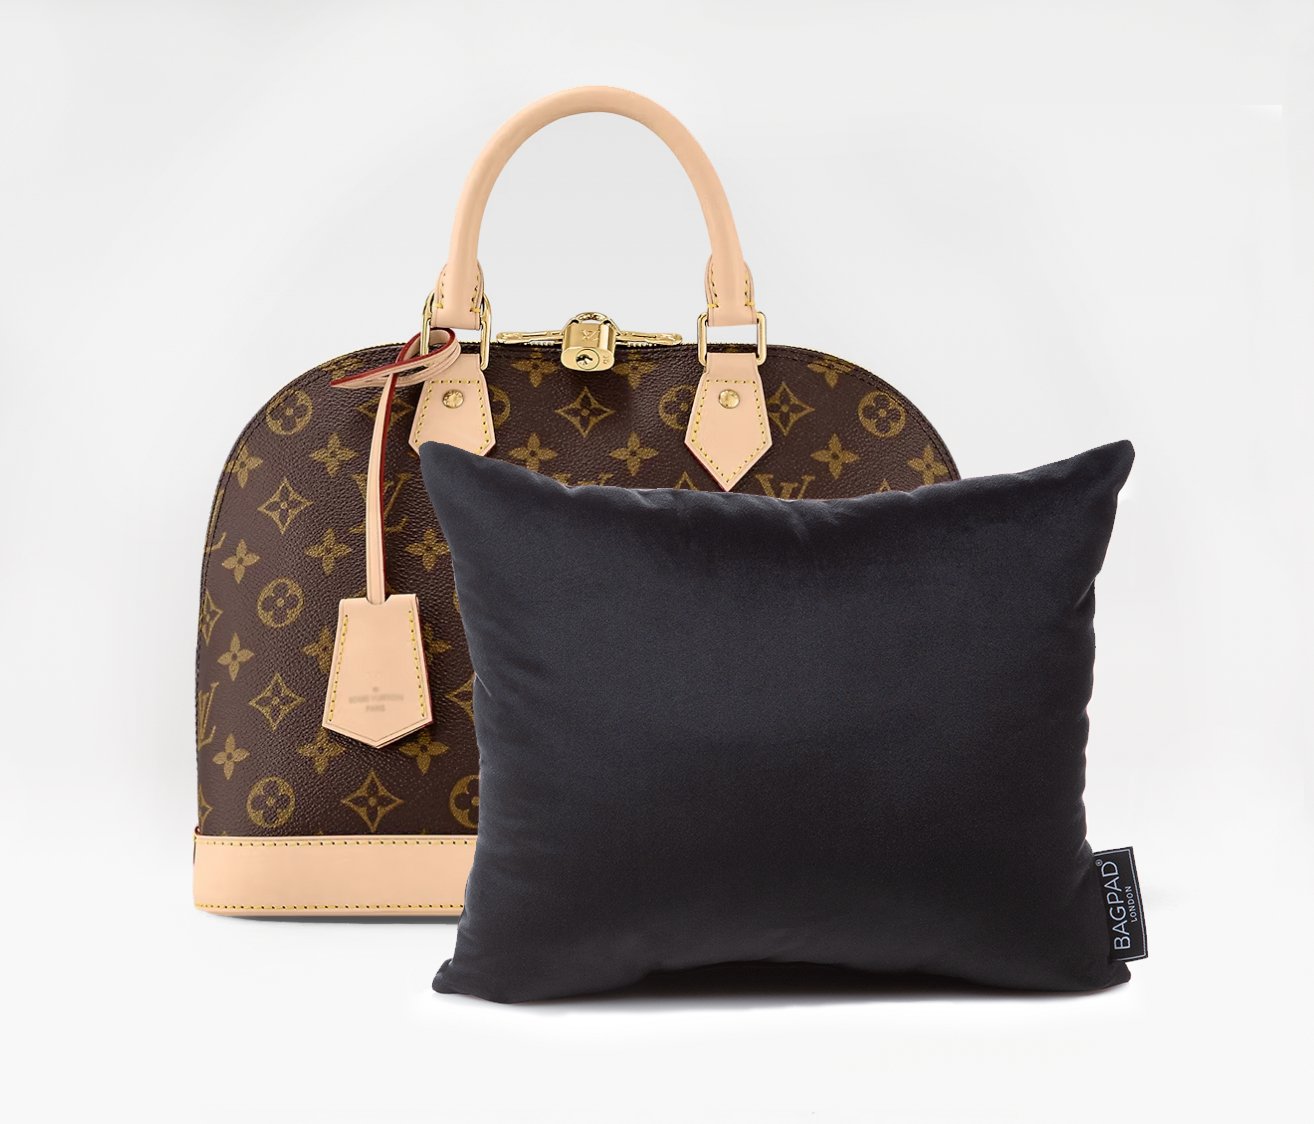 Purse Pillow for Louis Vuitton Alma Bag Models, Bag Shaper Pillow